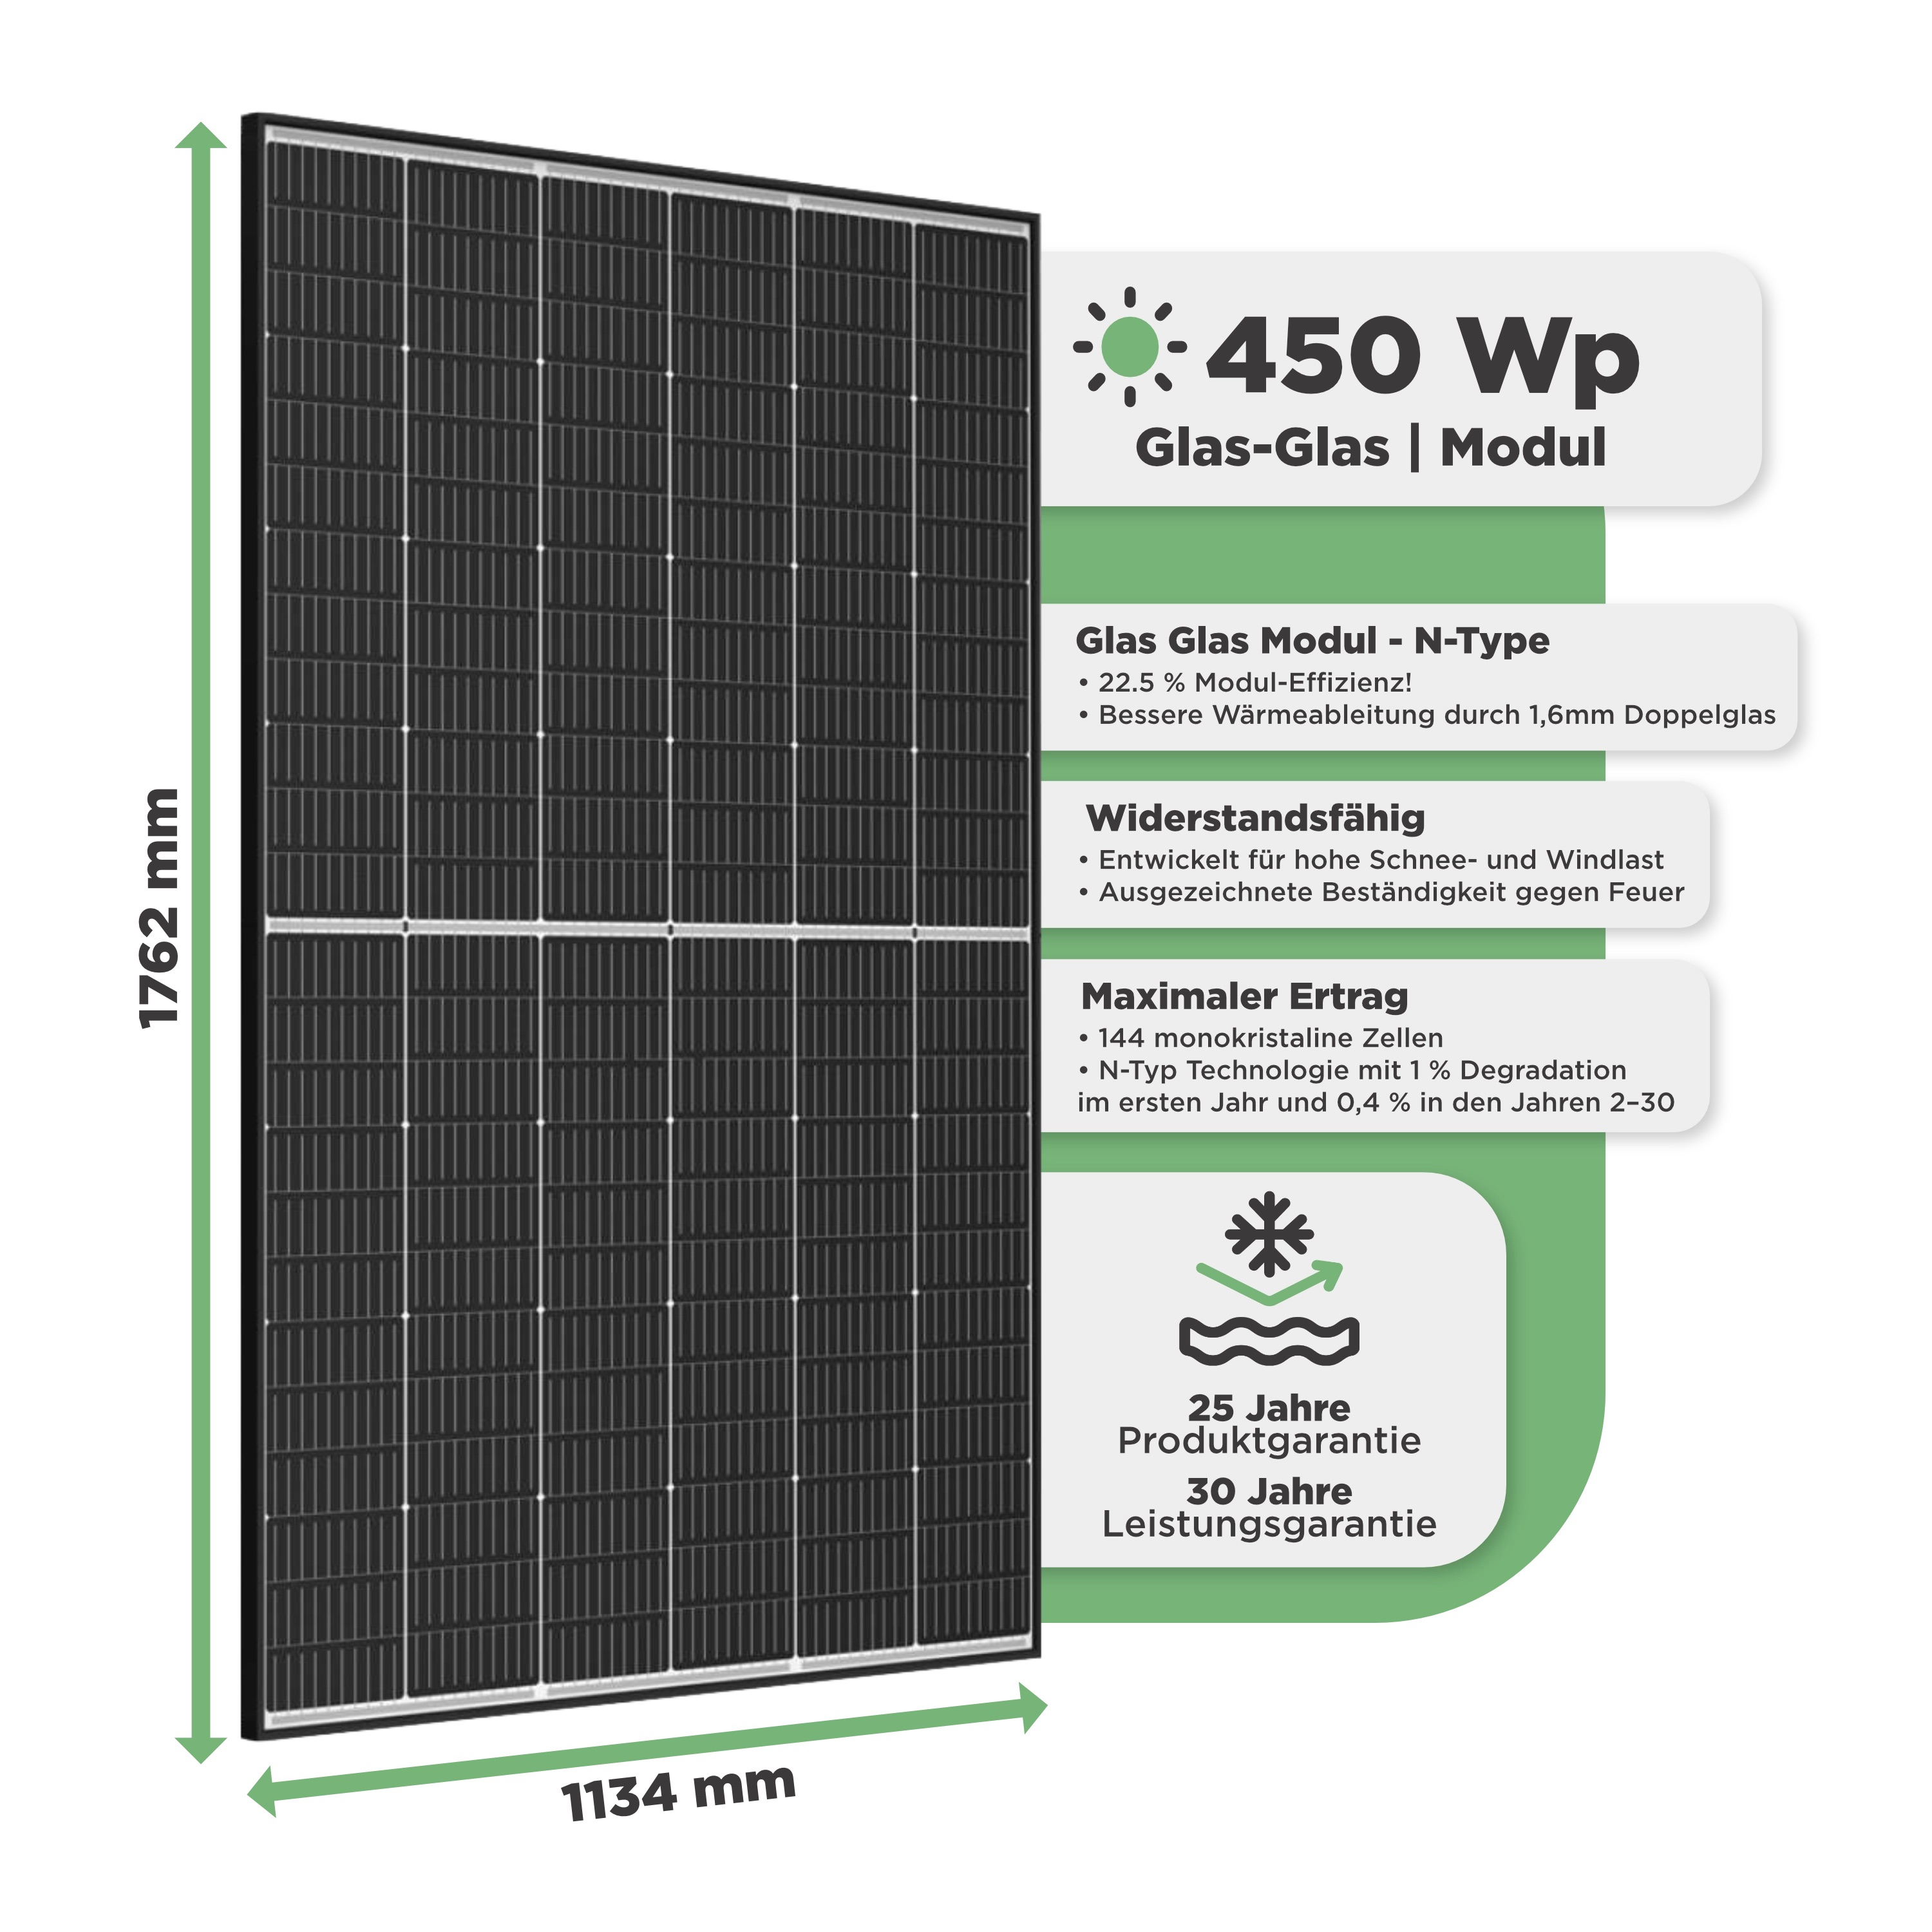 Balkonkraftwerk Flachdach 450 Wp — APsystems EZ1-M 800 W / Trina Solar / 450 Wp (Glas-Glas) / eine Reihe quer / 1 Modul / 15 m